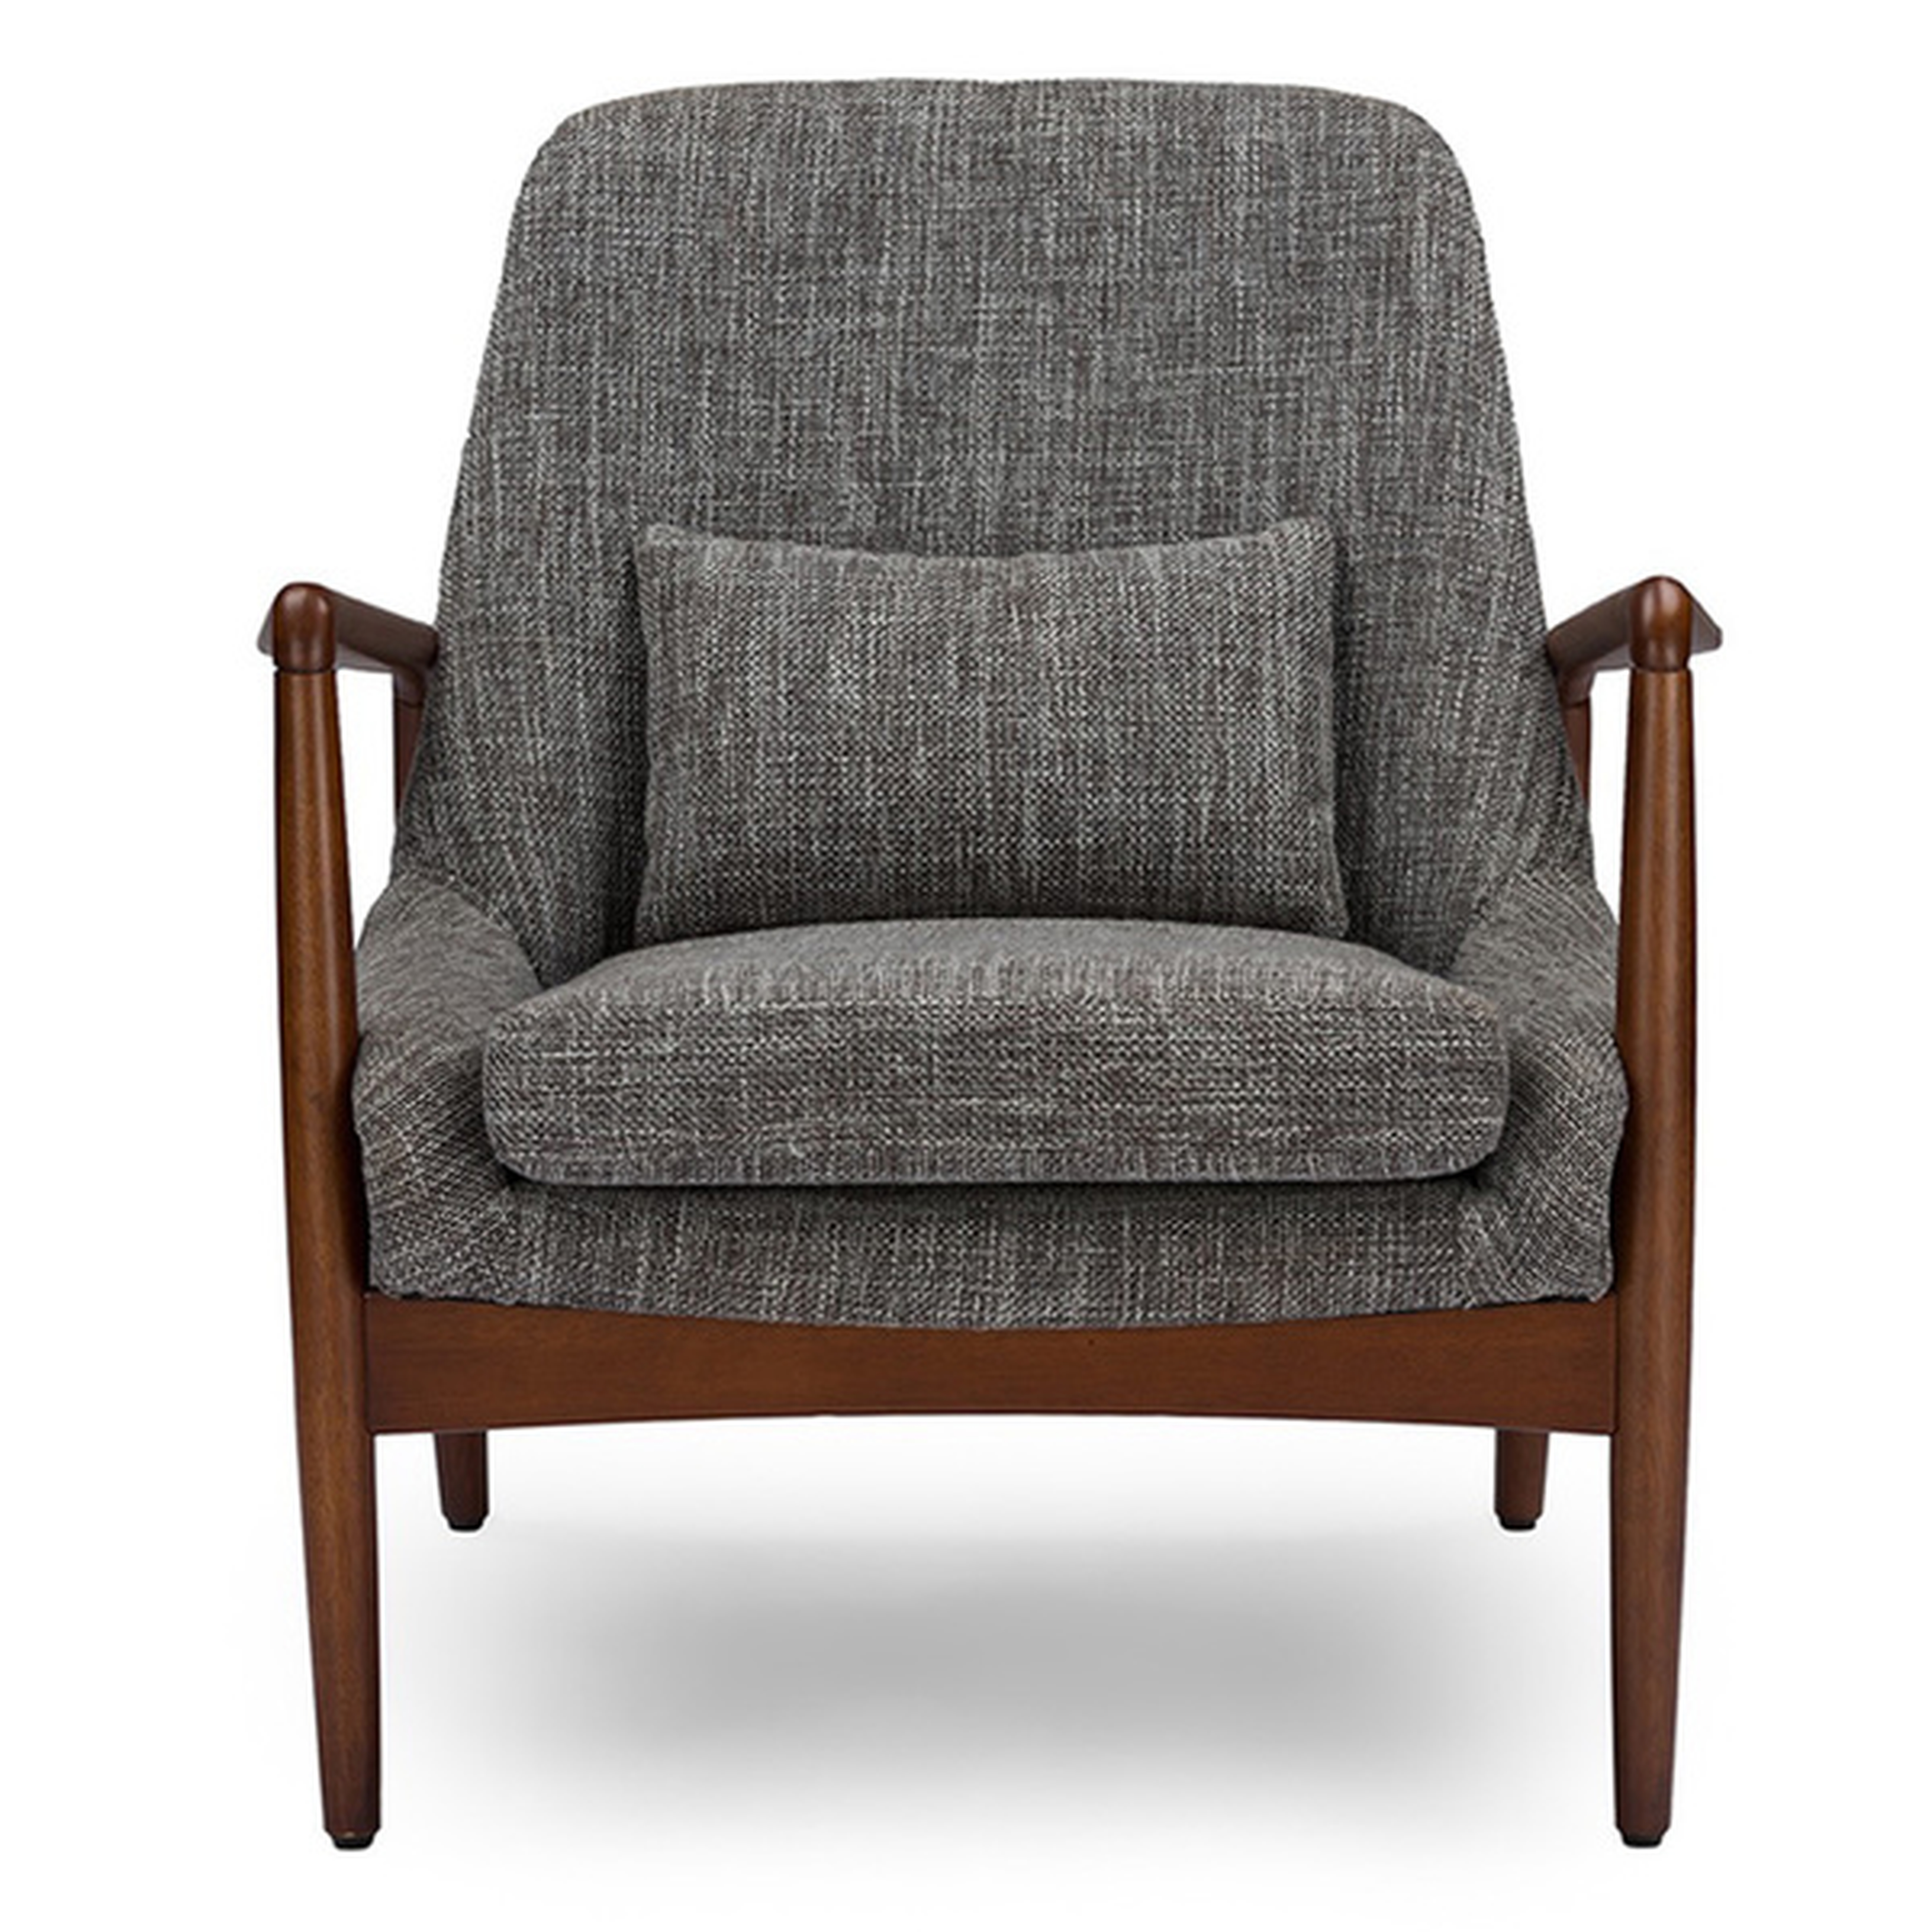 Baxton Studio Dixon Mid-century Modern Grey Fabric Upholstered Lounge Chair - Overstock